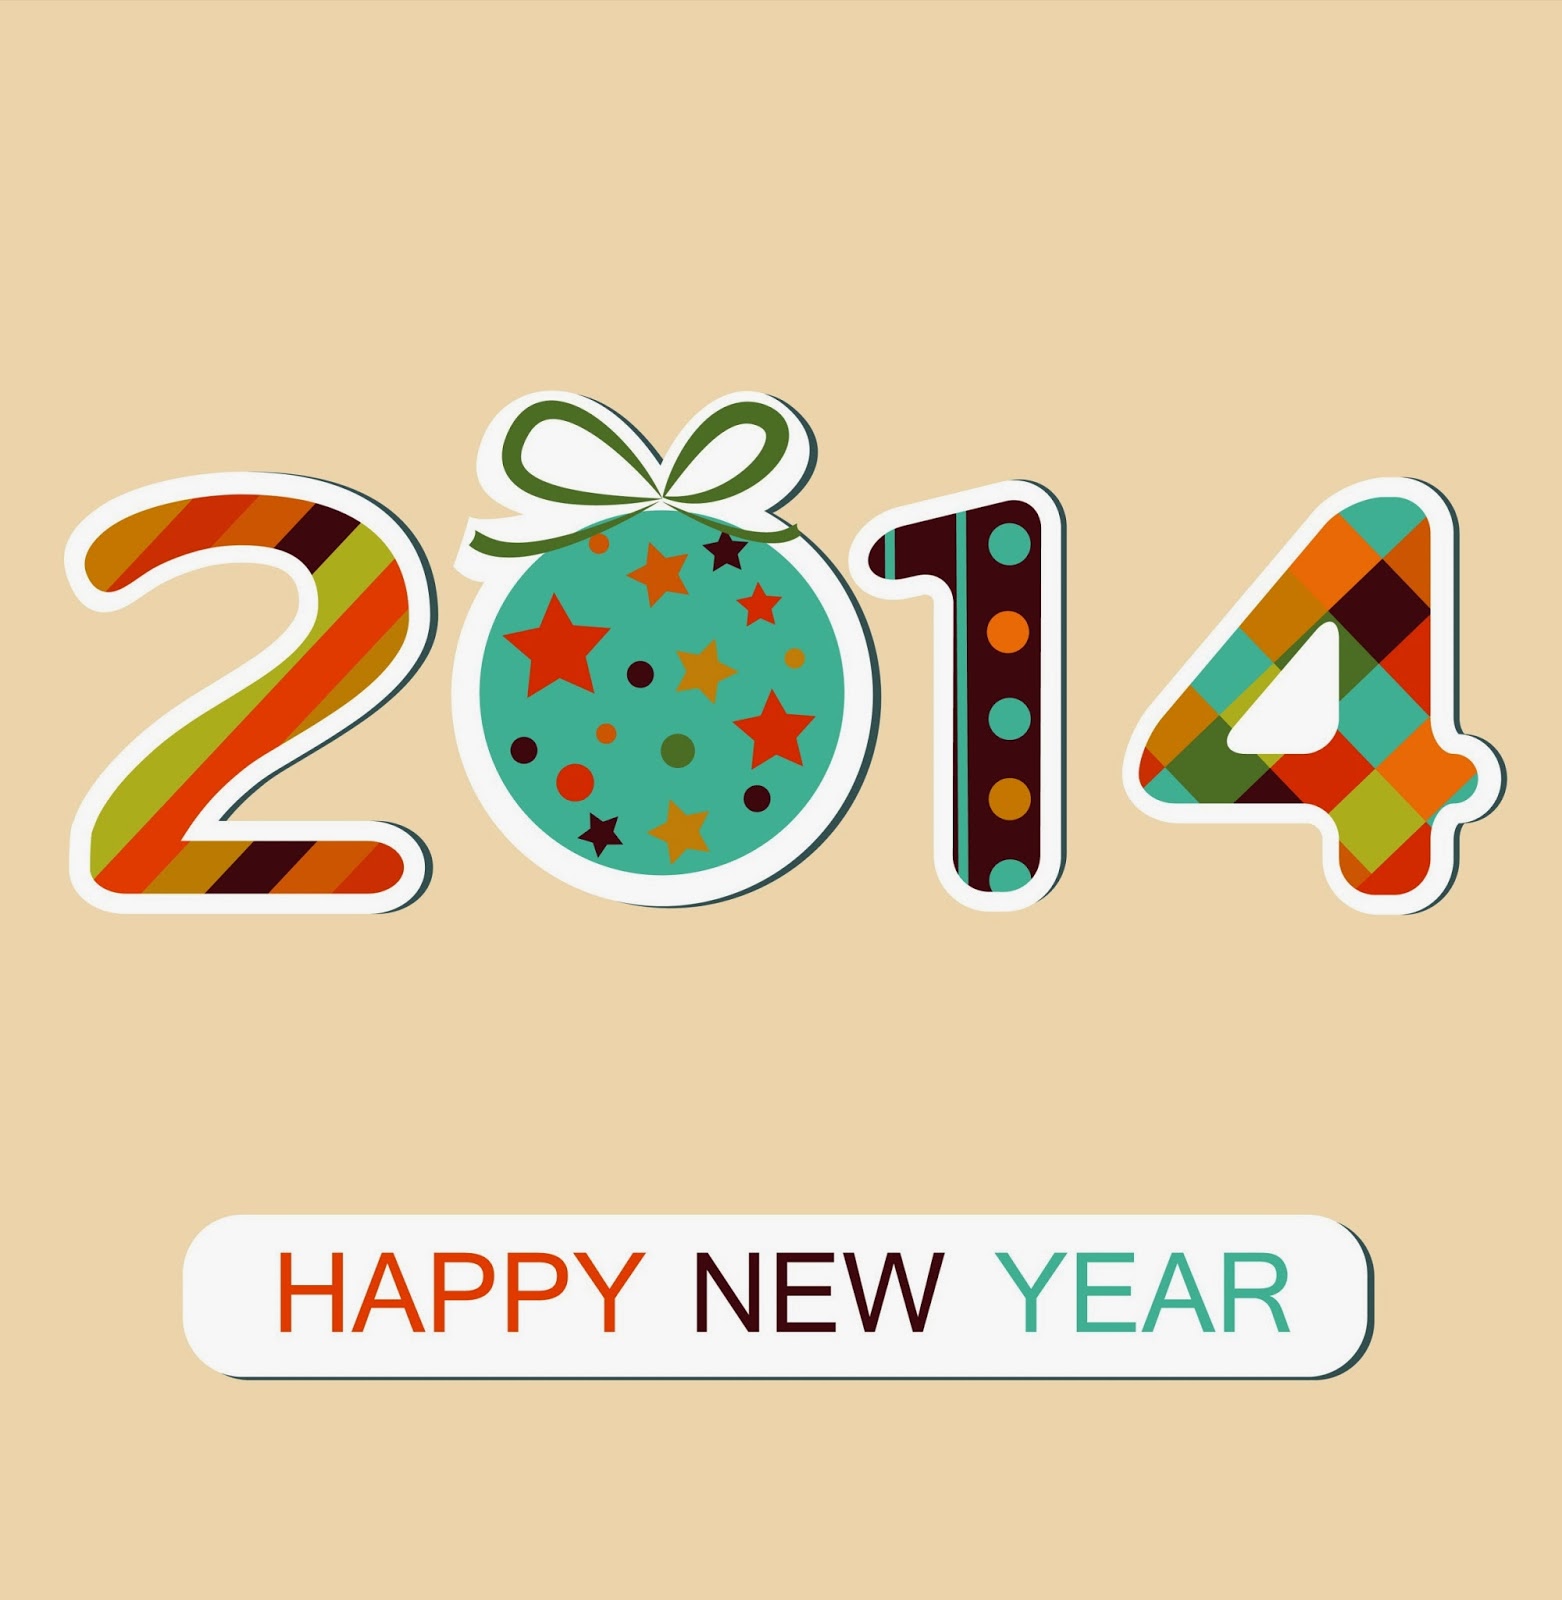 clipart happy new year 2014 - photo #29